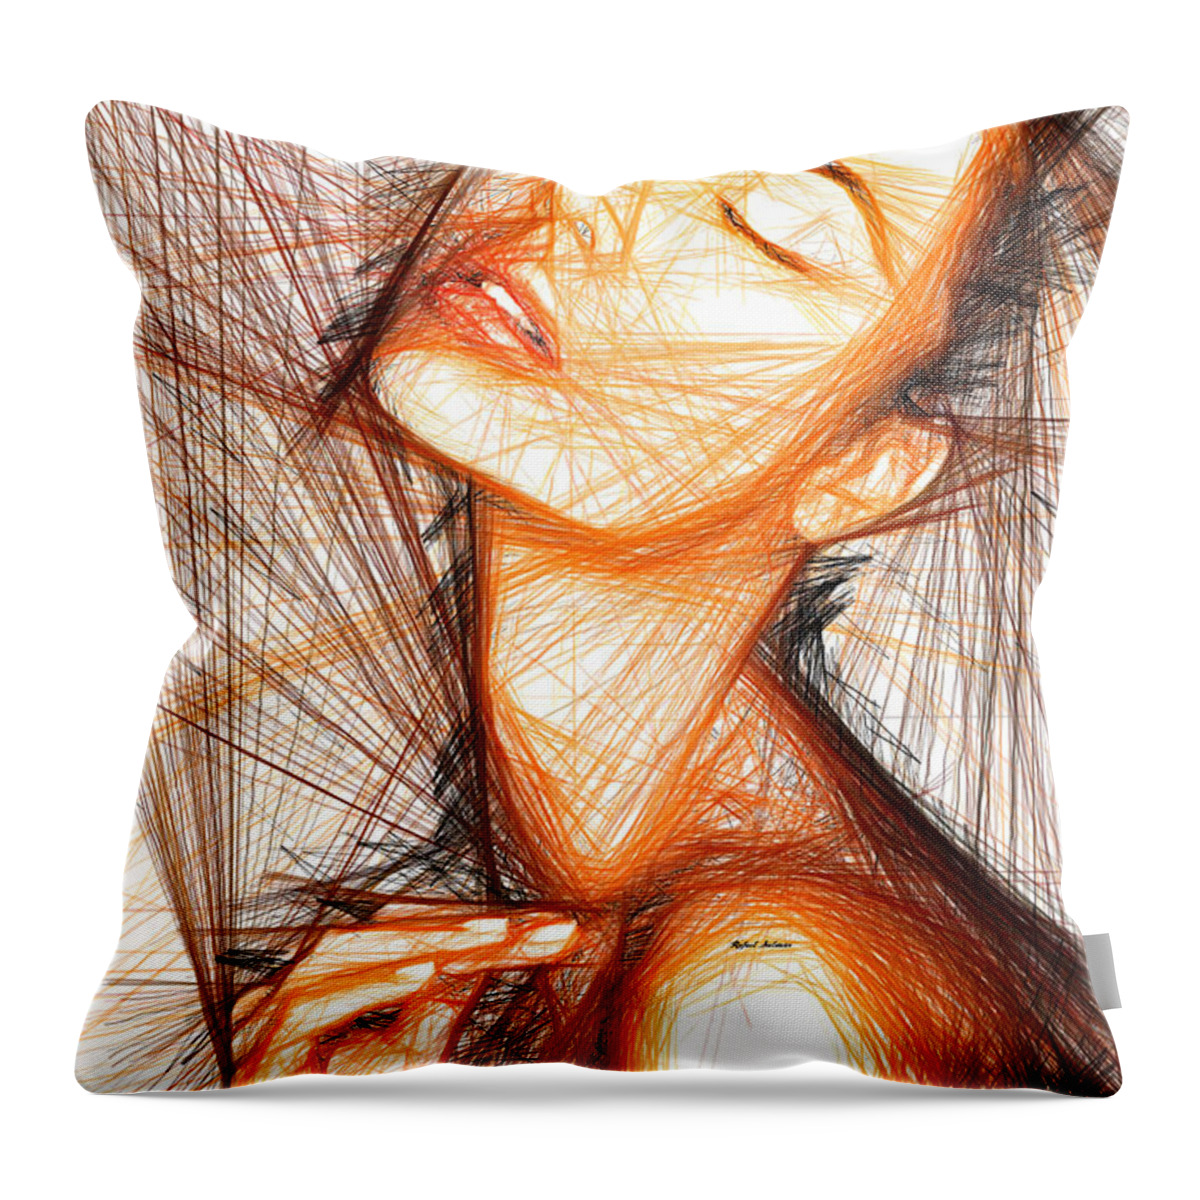 Rafael Salazar Throw Pillow featuring the digital art Female Portrait by Rafael Salazar